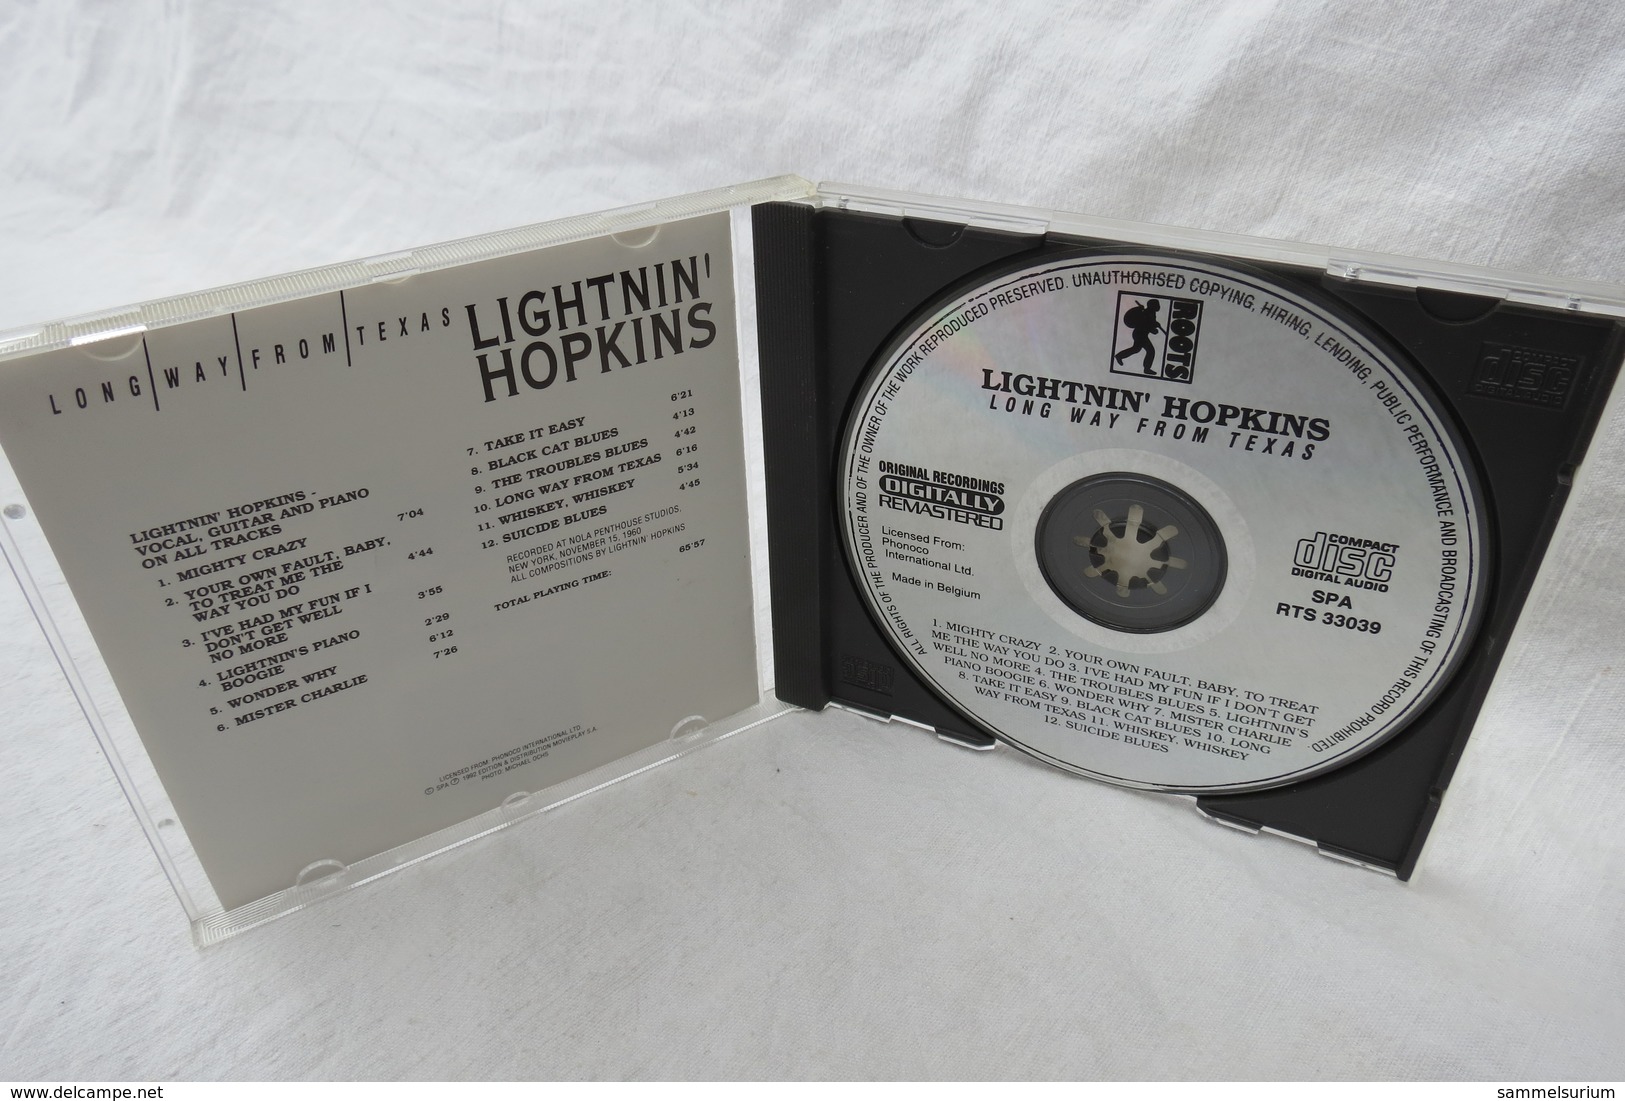 CD "Lightnin' Hopkins" Long Way From Texas - Blues